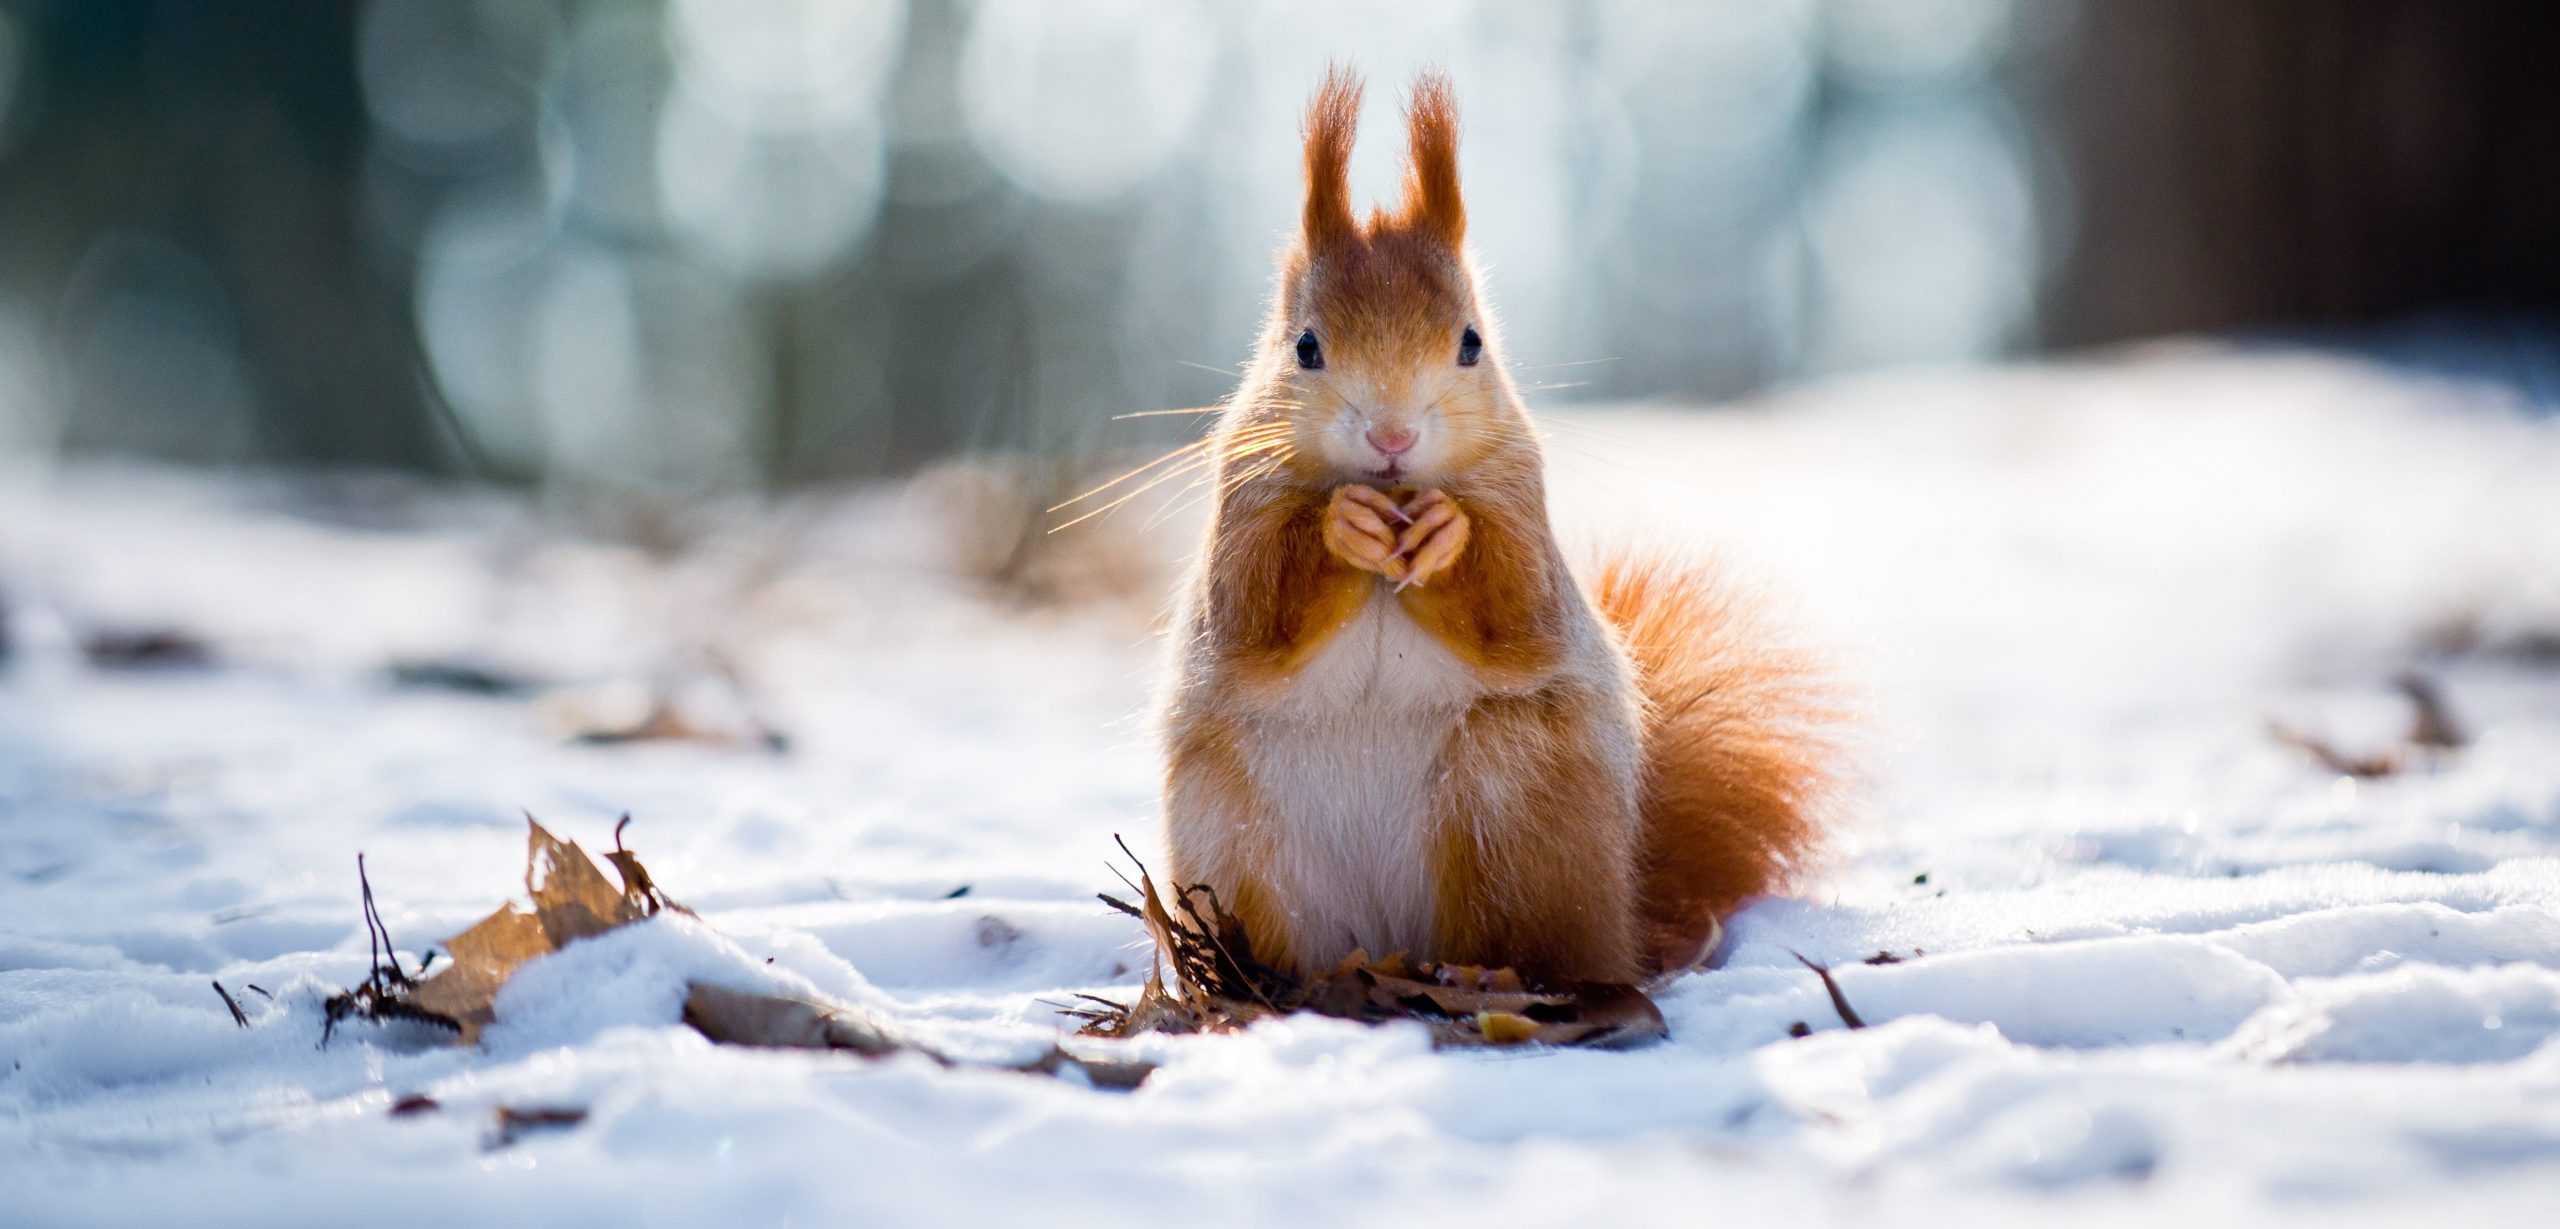 https://www.trutechinc.com/wp-content/uploads/2022/10/squirrel-in-winter-min-scaled.jpg